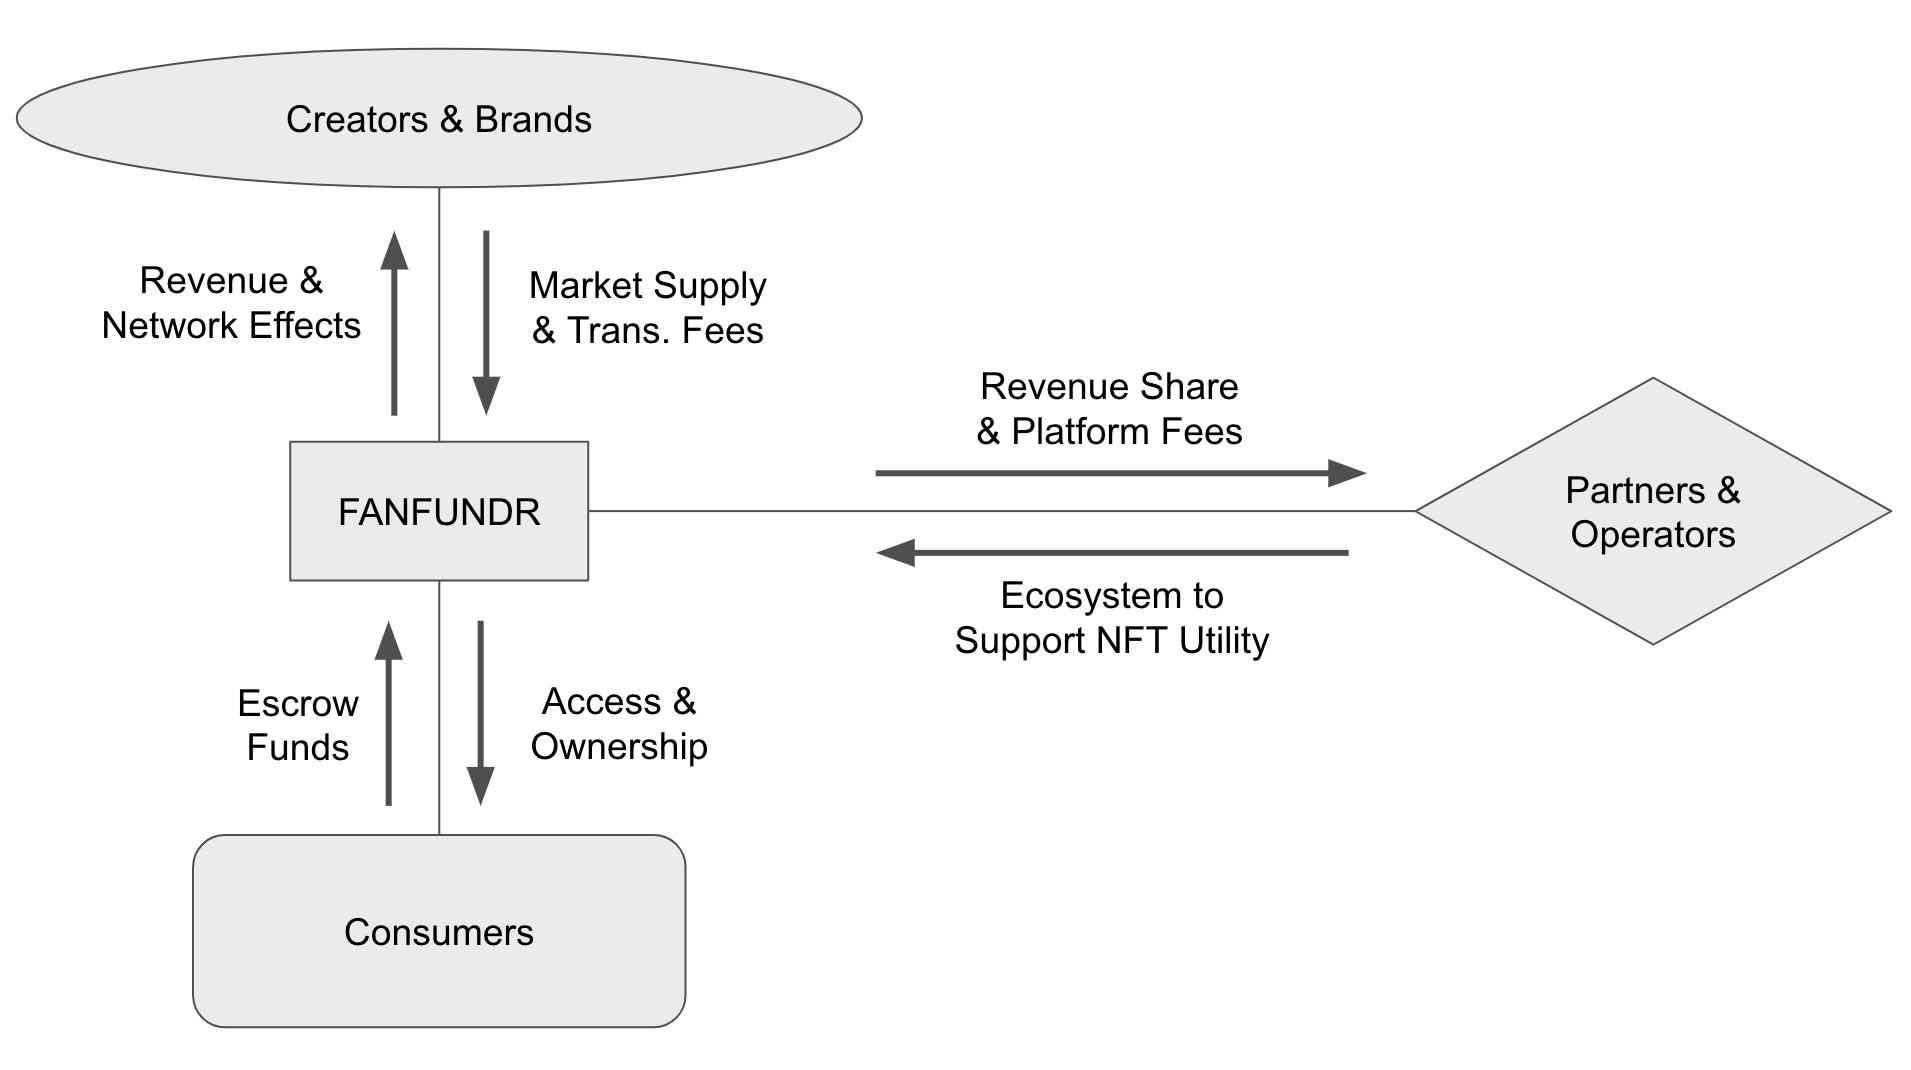 Value Exchange in FANFUNDR Ecosystem